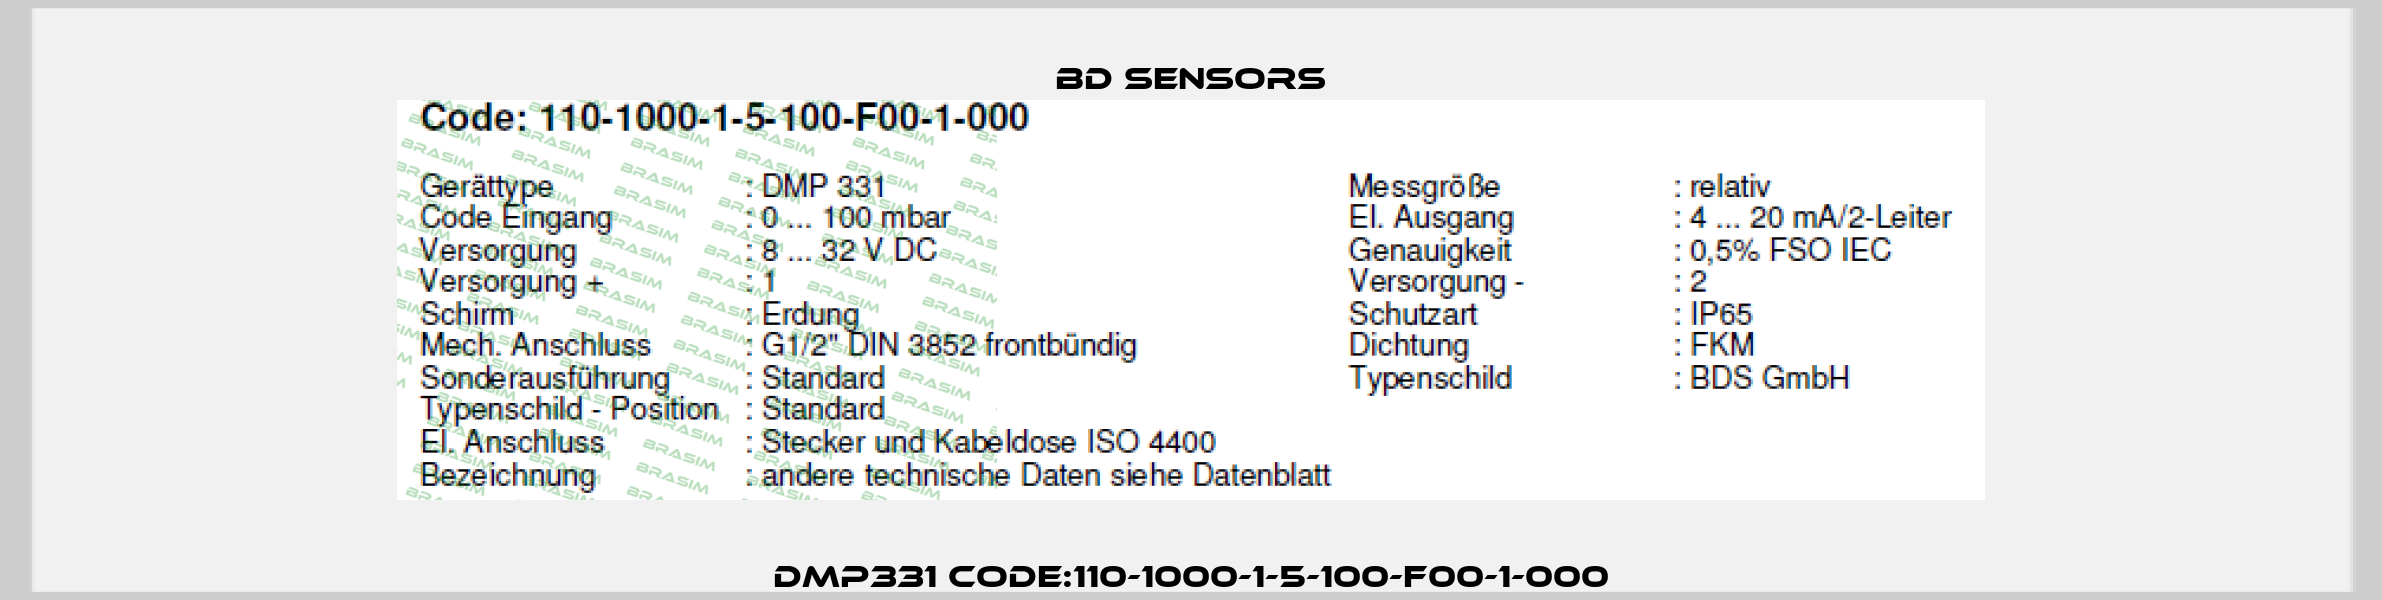 DMP331 Code:110-1000-1-5-100-F00-1-000 Bd Sensors